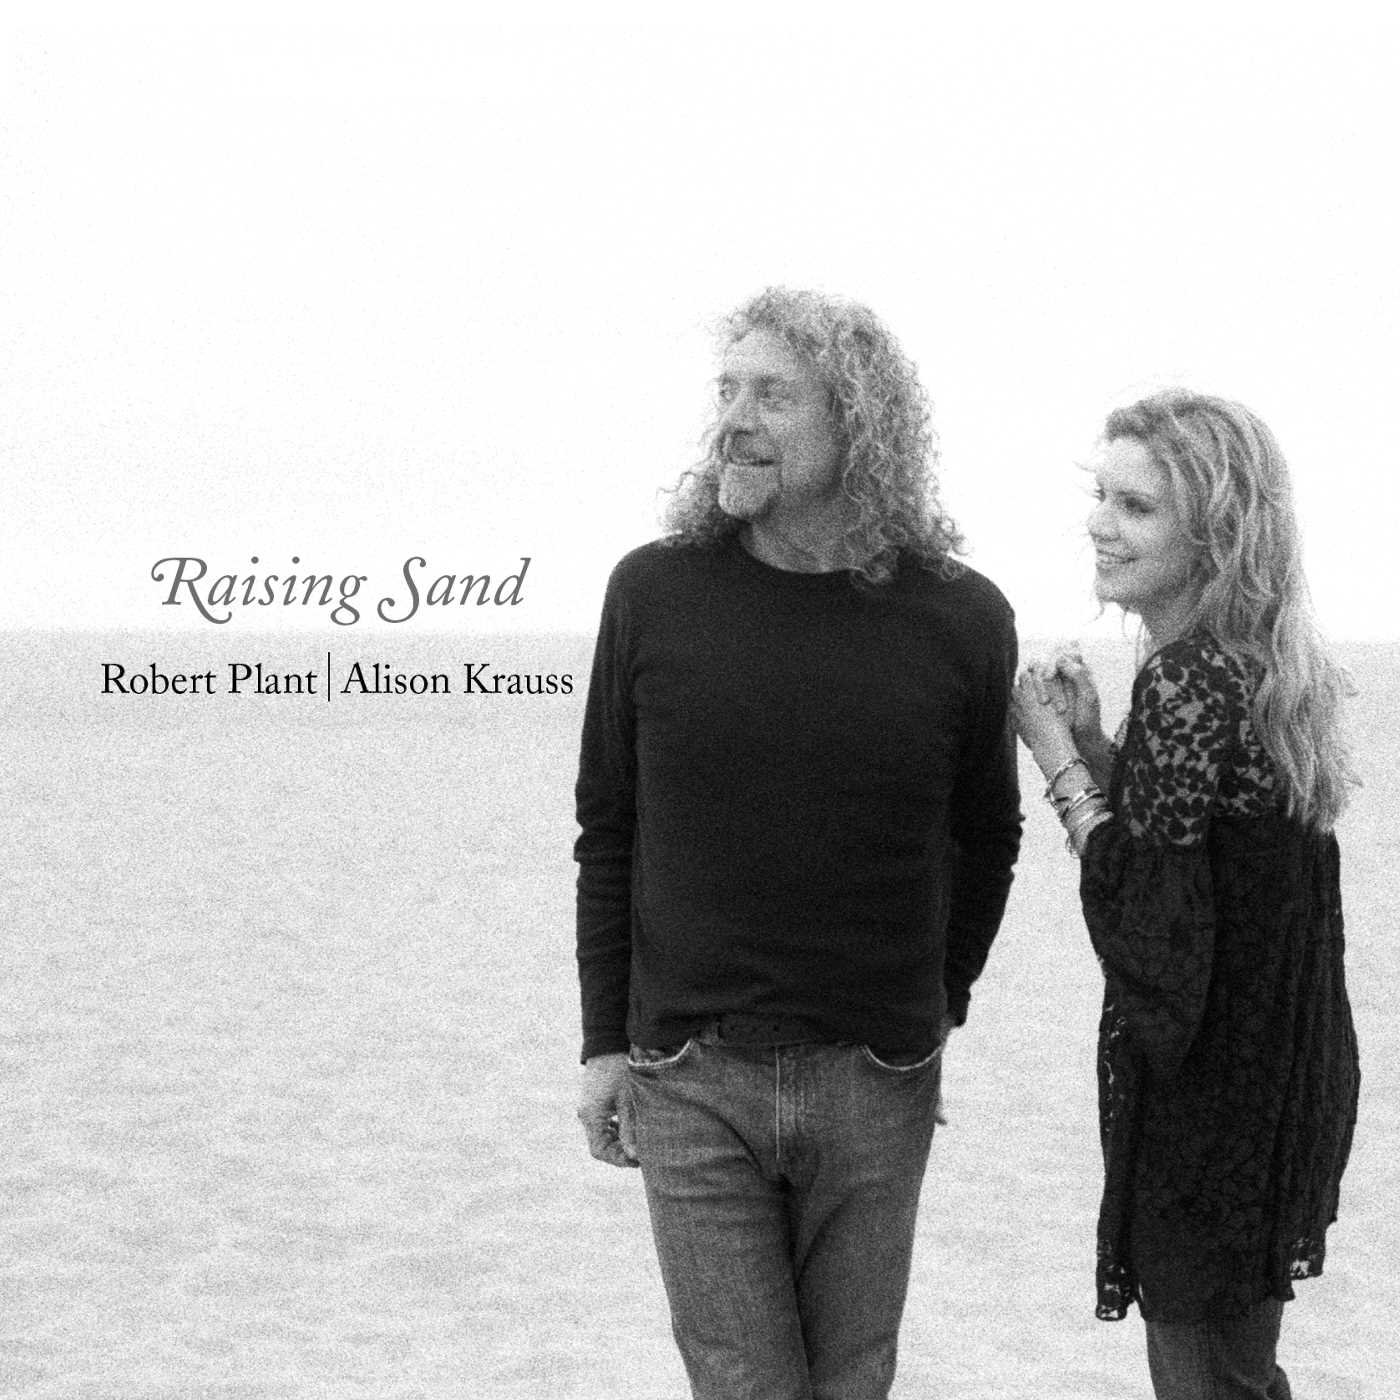 Robert Plant & Alison Krauss "Raising Sand" 2LP